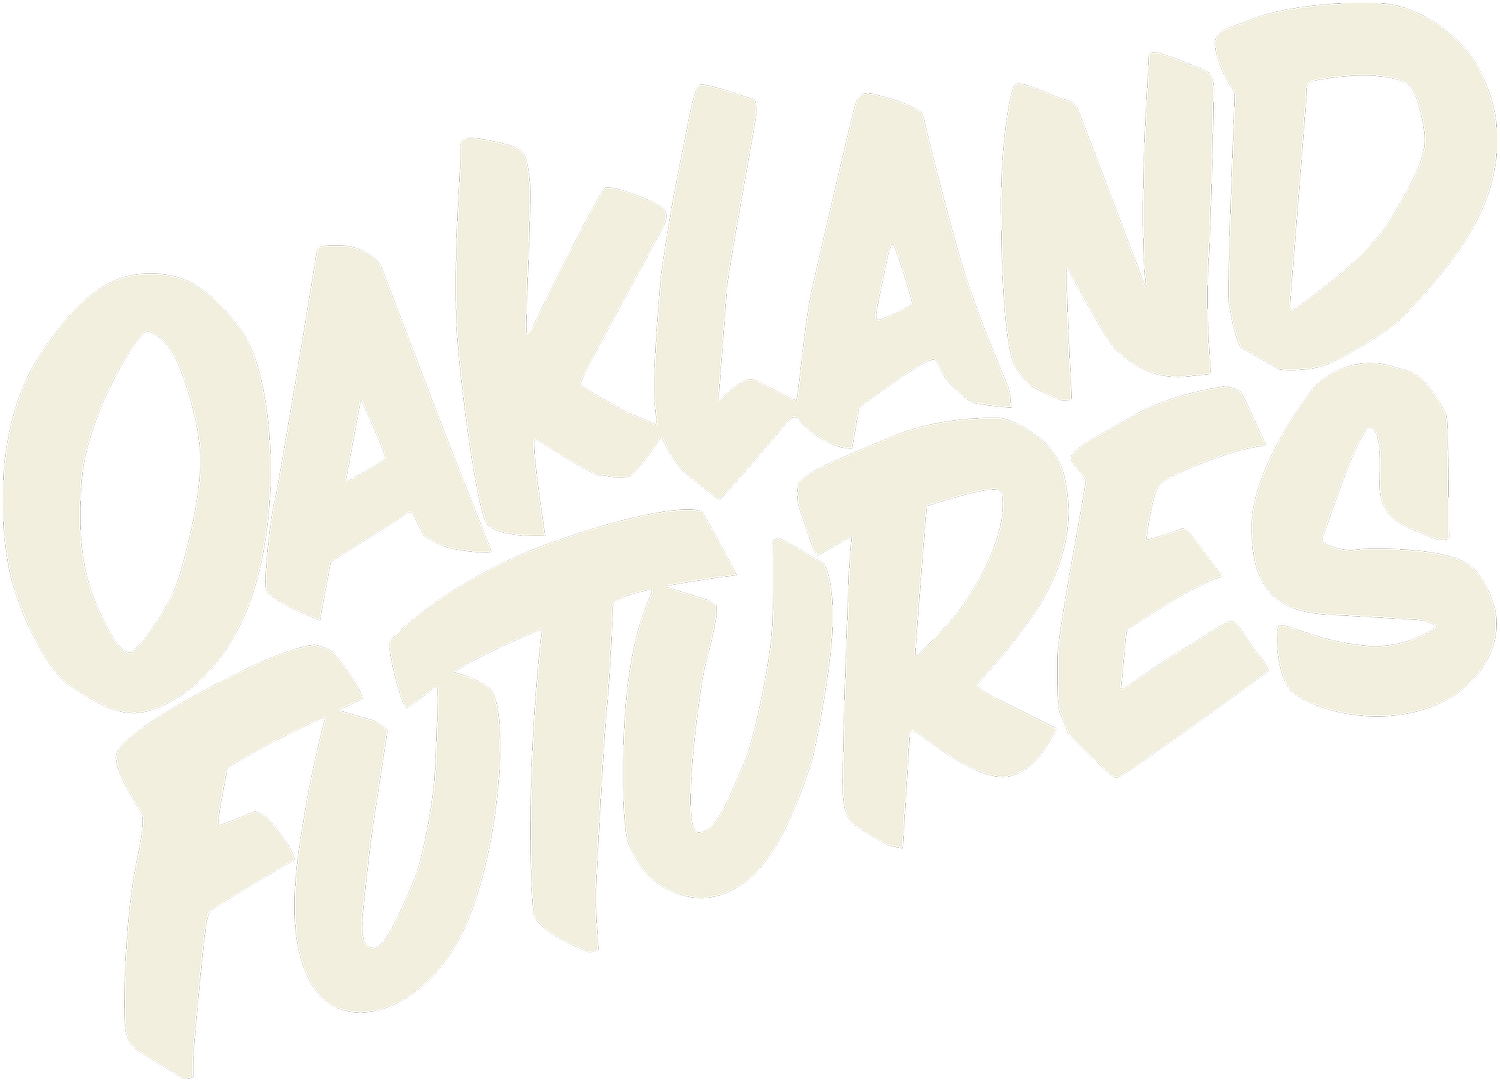 Oakland Futures